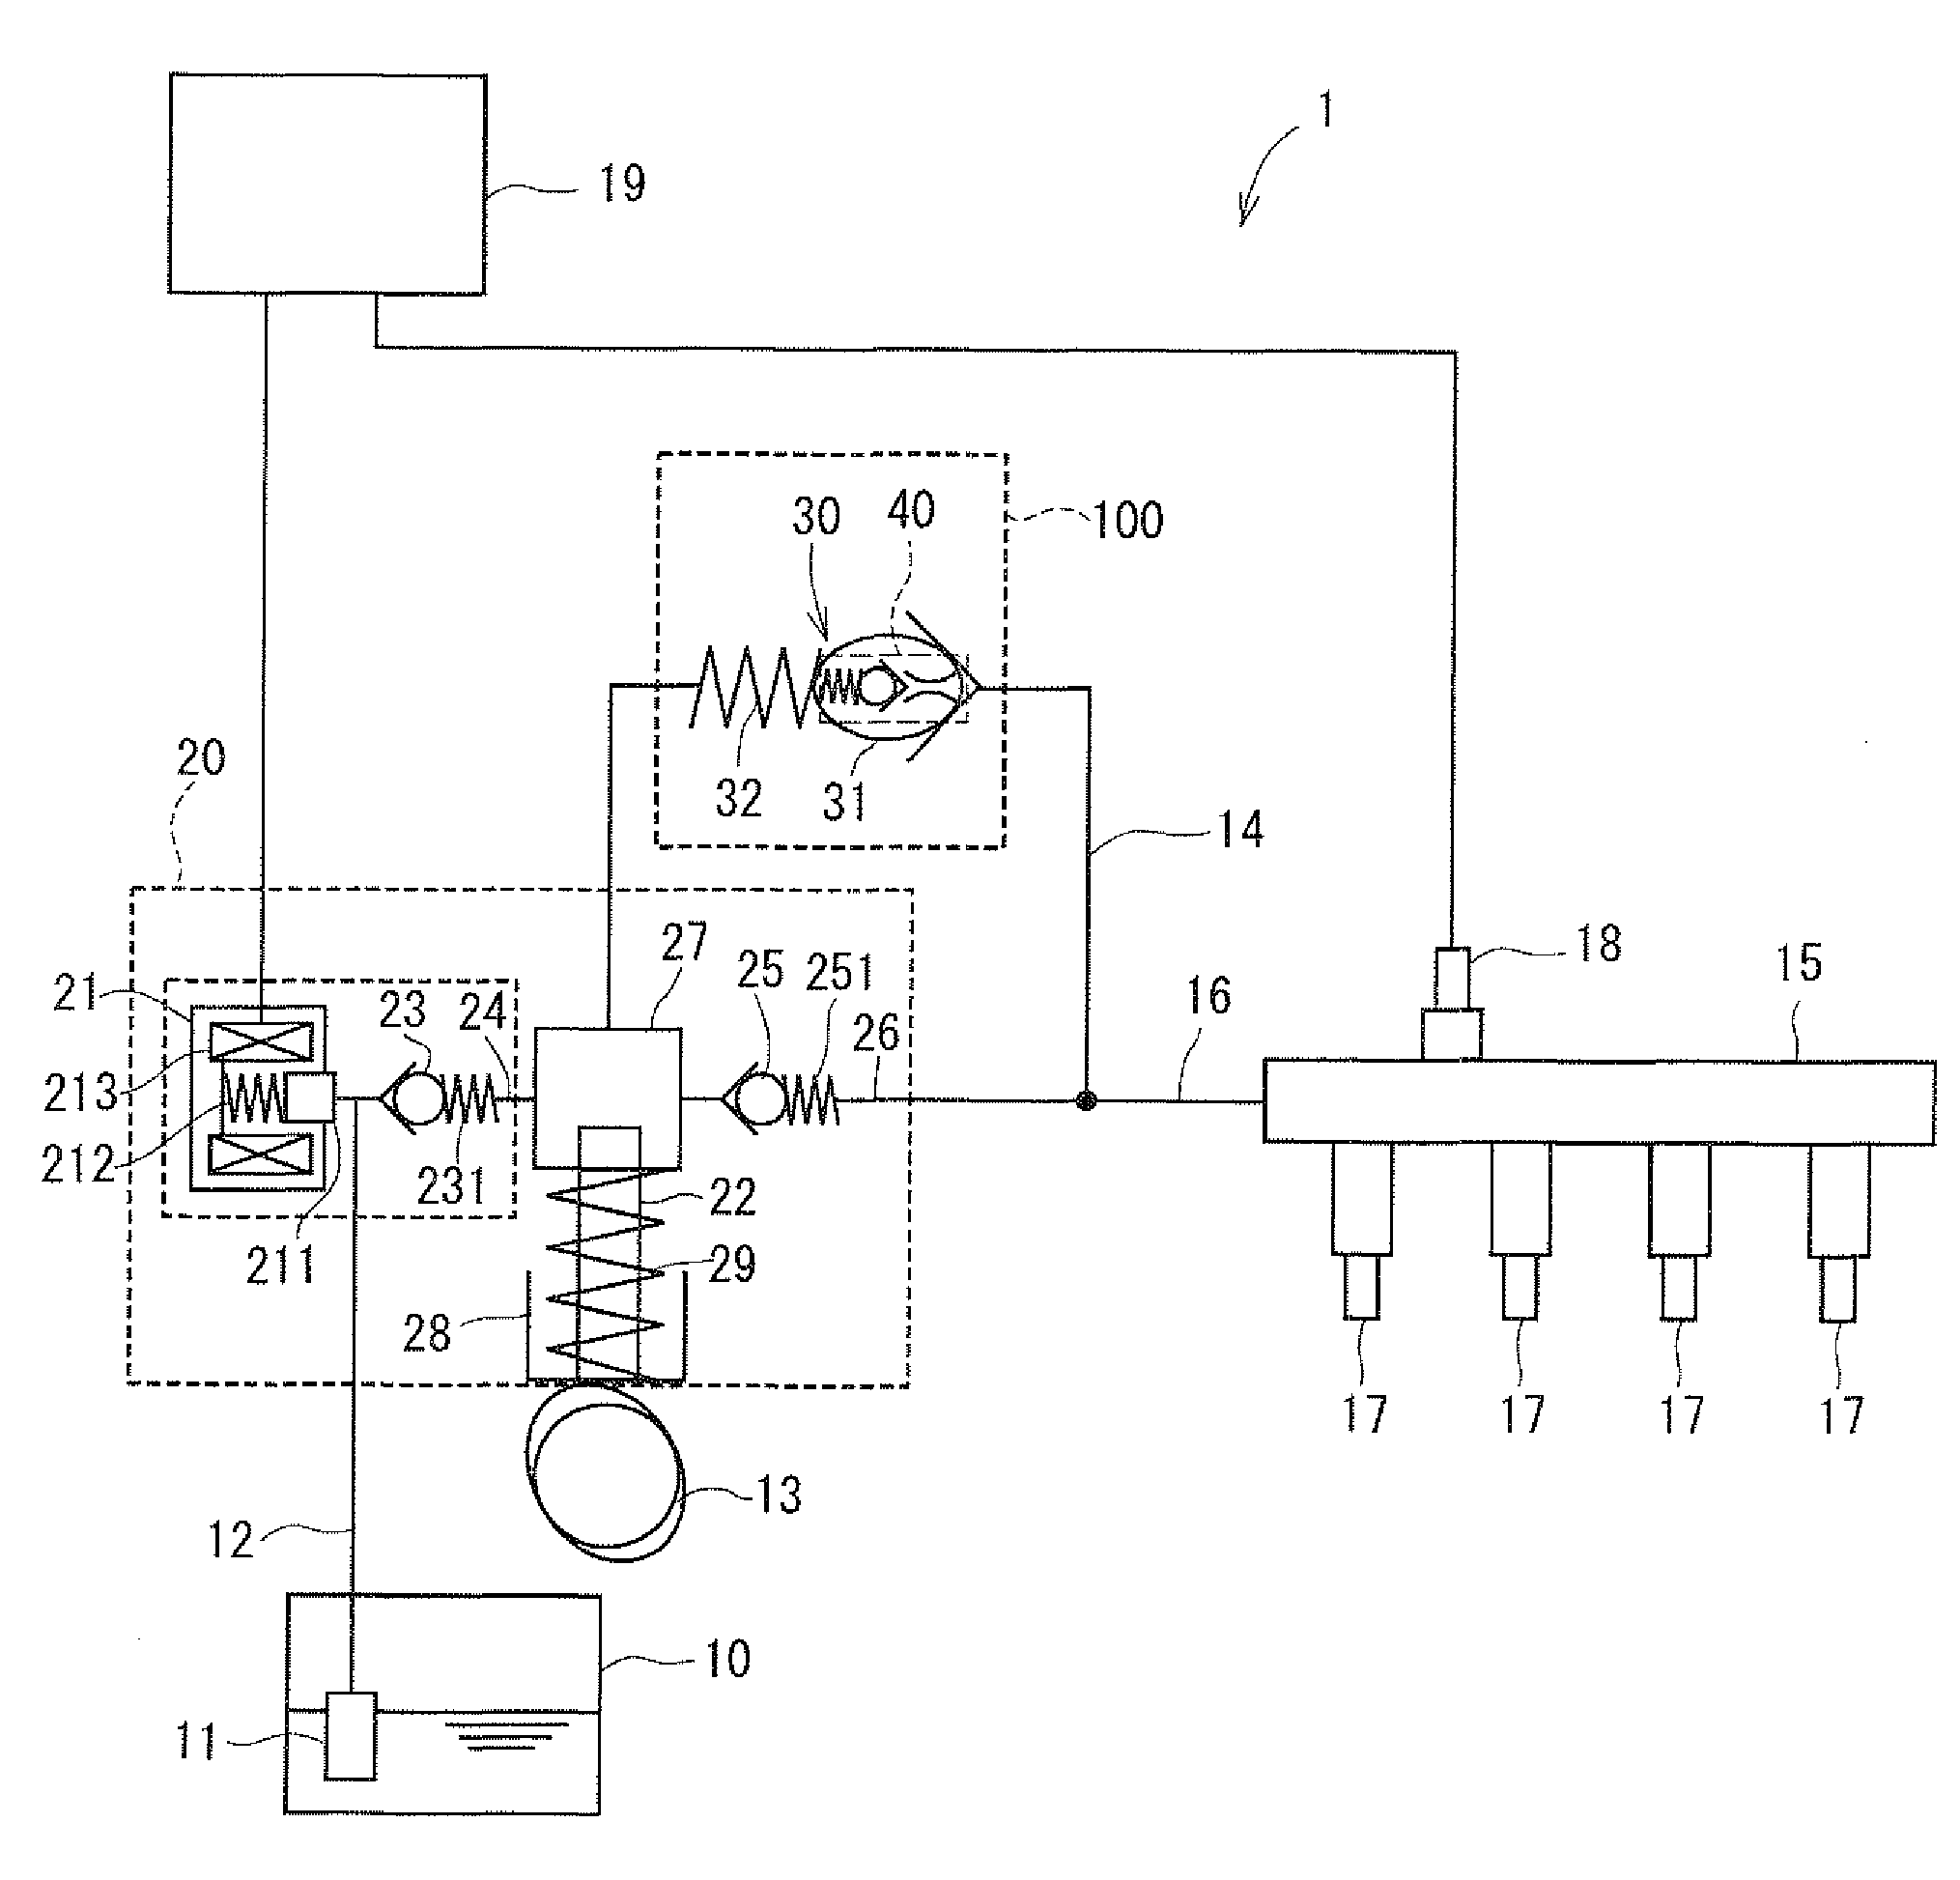 Fuel supply system having pressure control valve